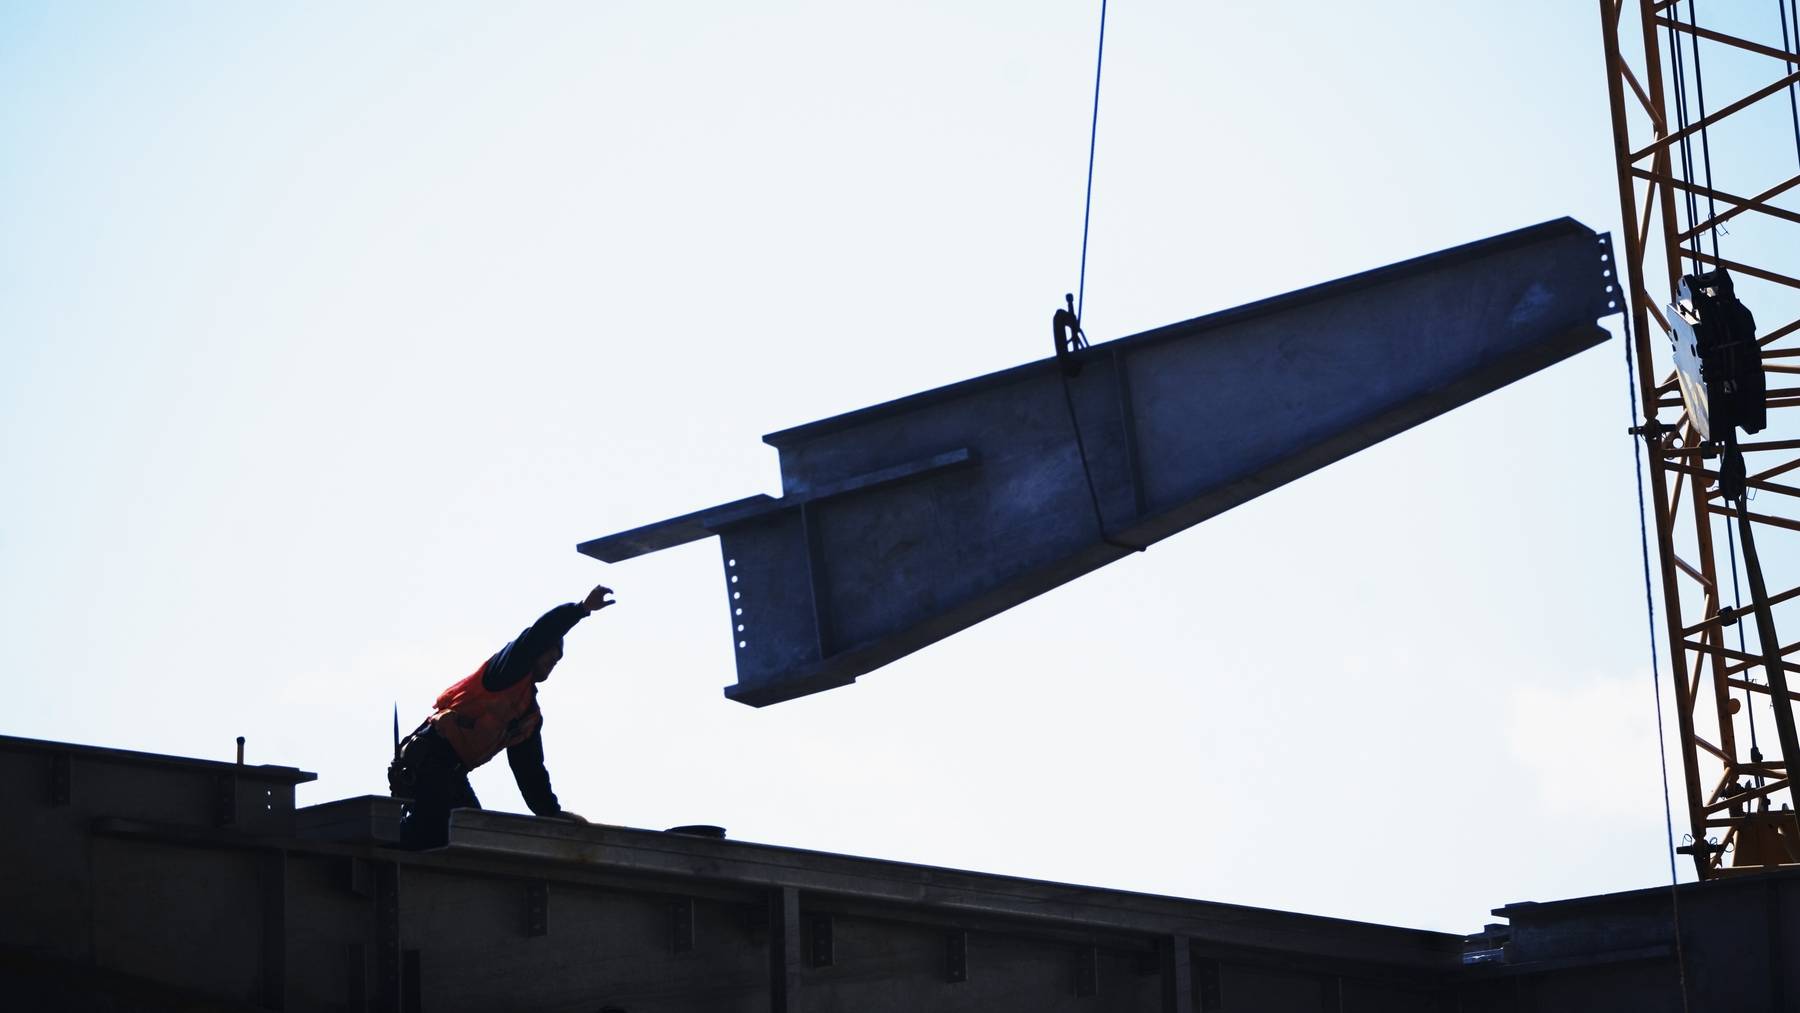 Stahlträger Kran Baustelle Arbeitsunfall Symbolbild